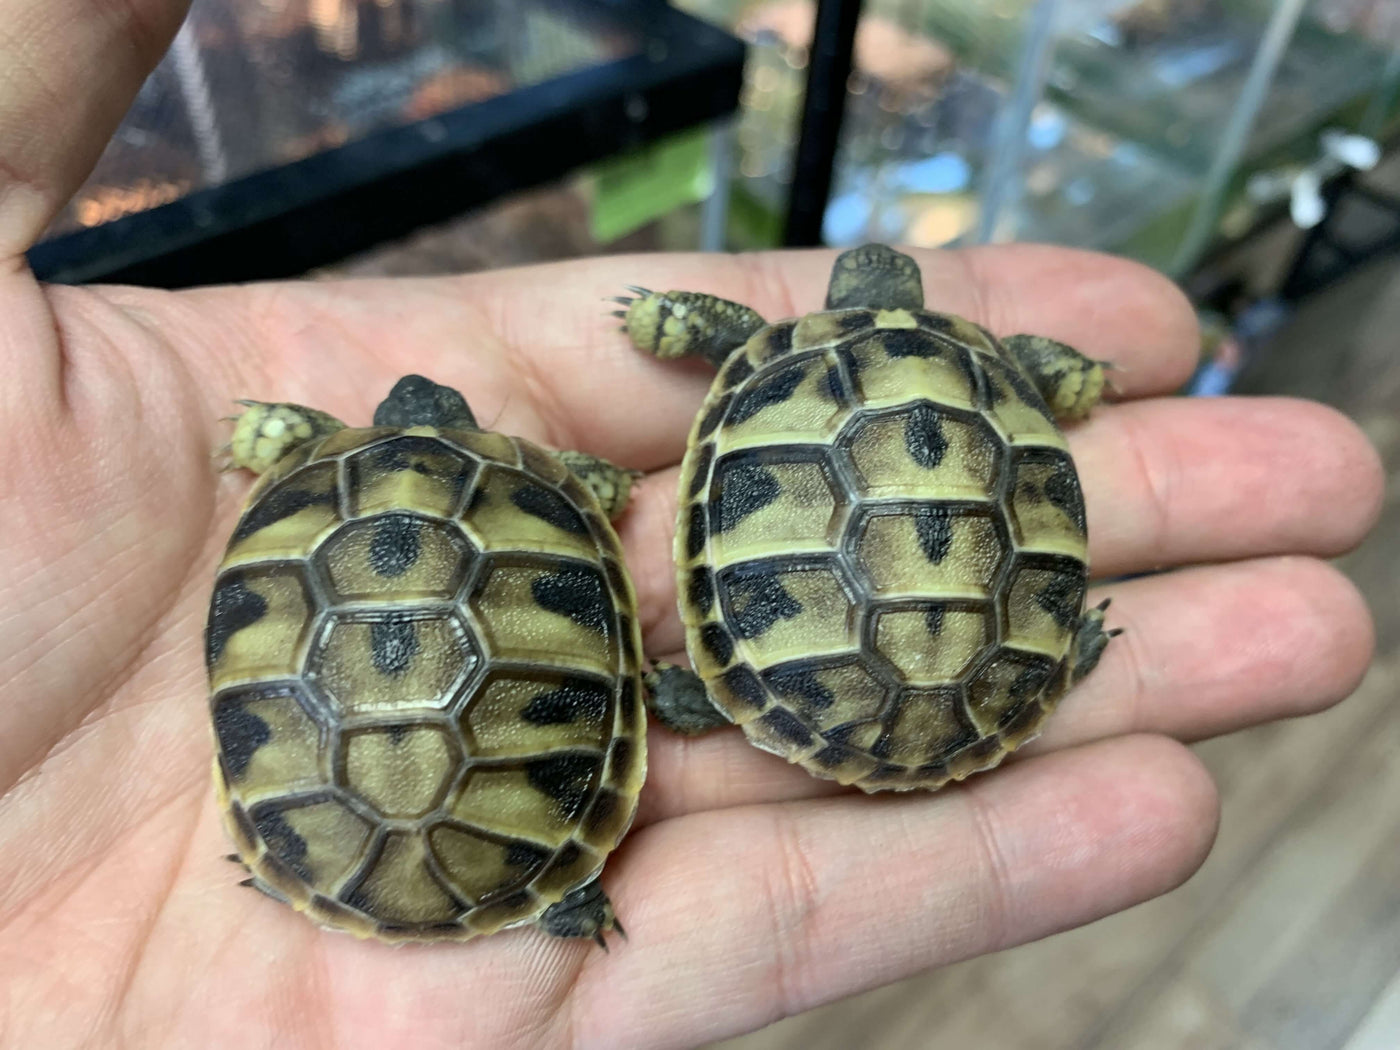 hermanns tortoise for sale, buy reptiles online